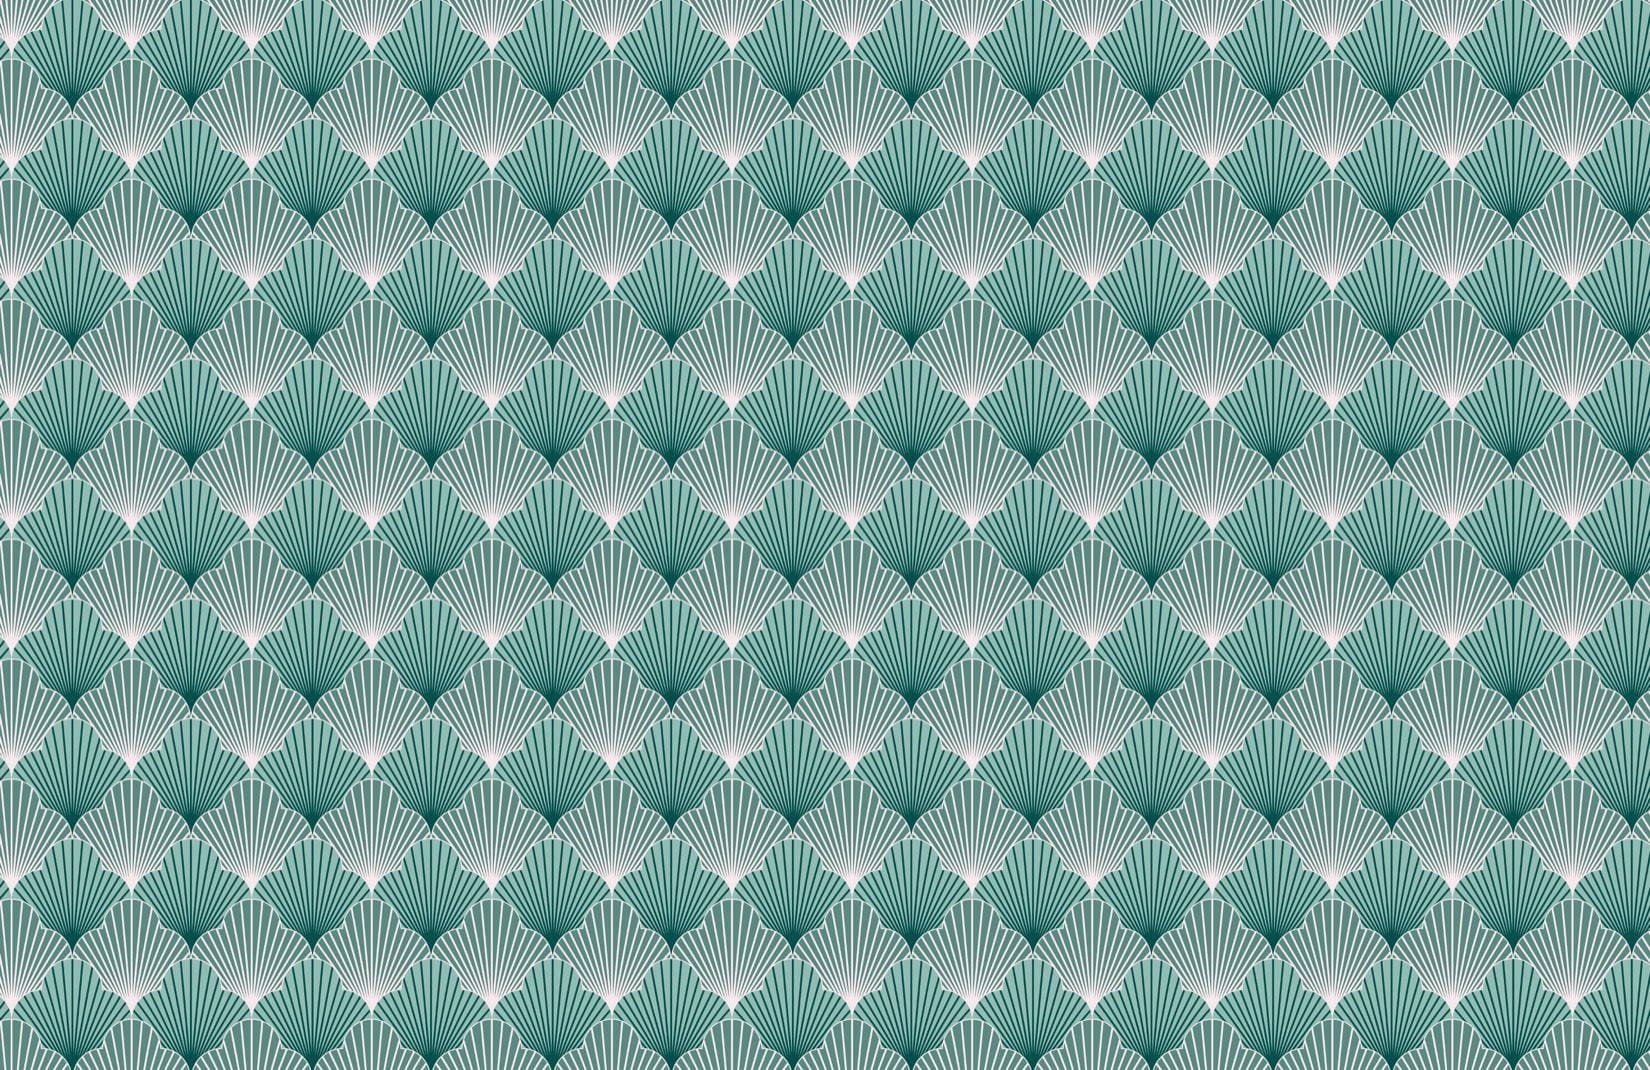 Free Pattern Wallpaper Downloads, [1400+] Pattern Wallpapers for FREE |  